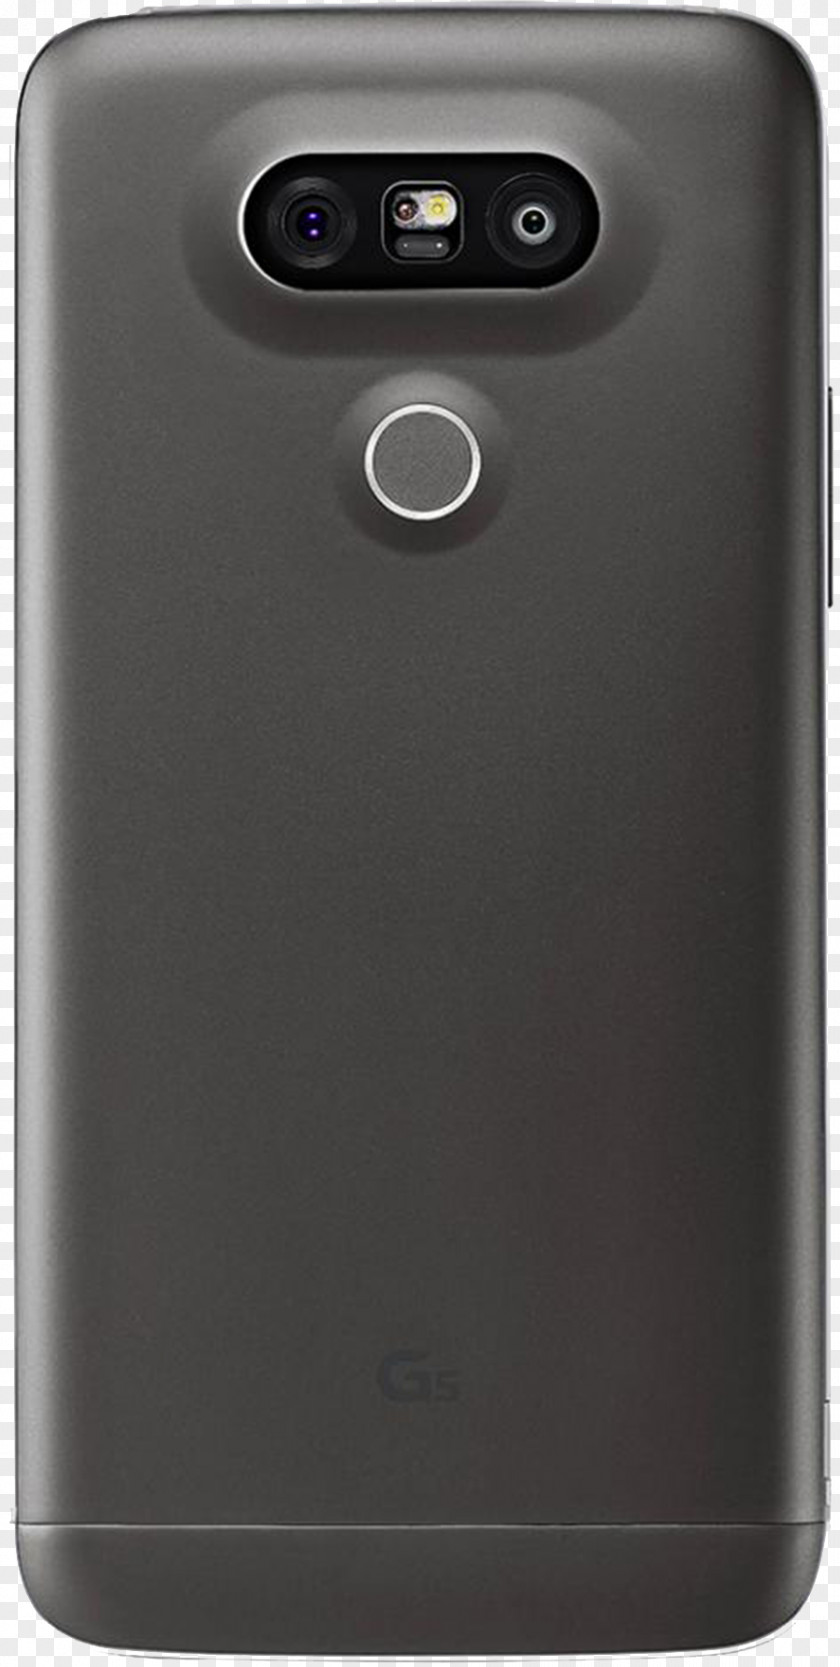 Smartphone LG G5 SE K10 Electronics Samsung Galaxy S7 PNG